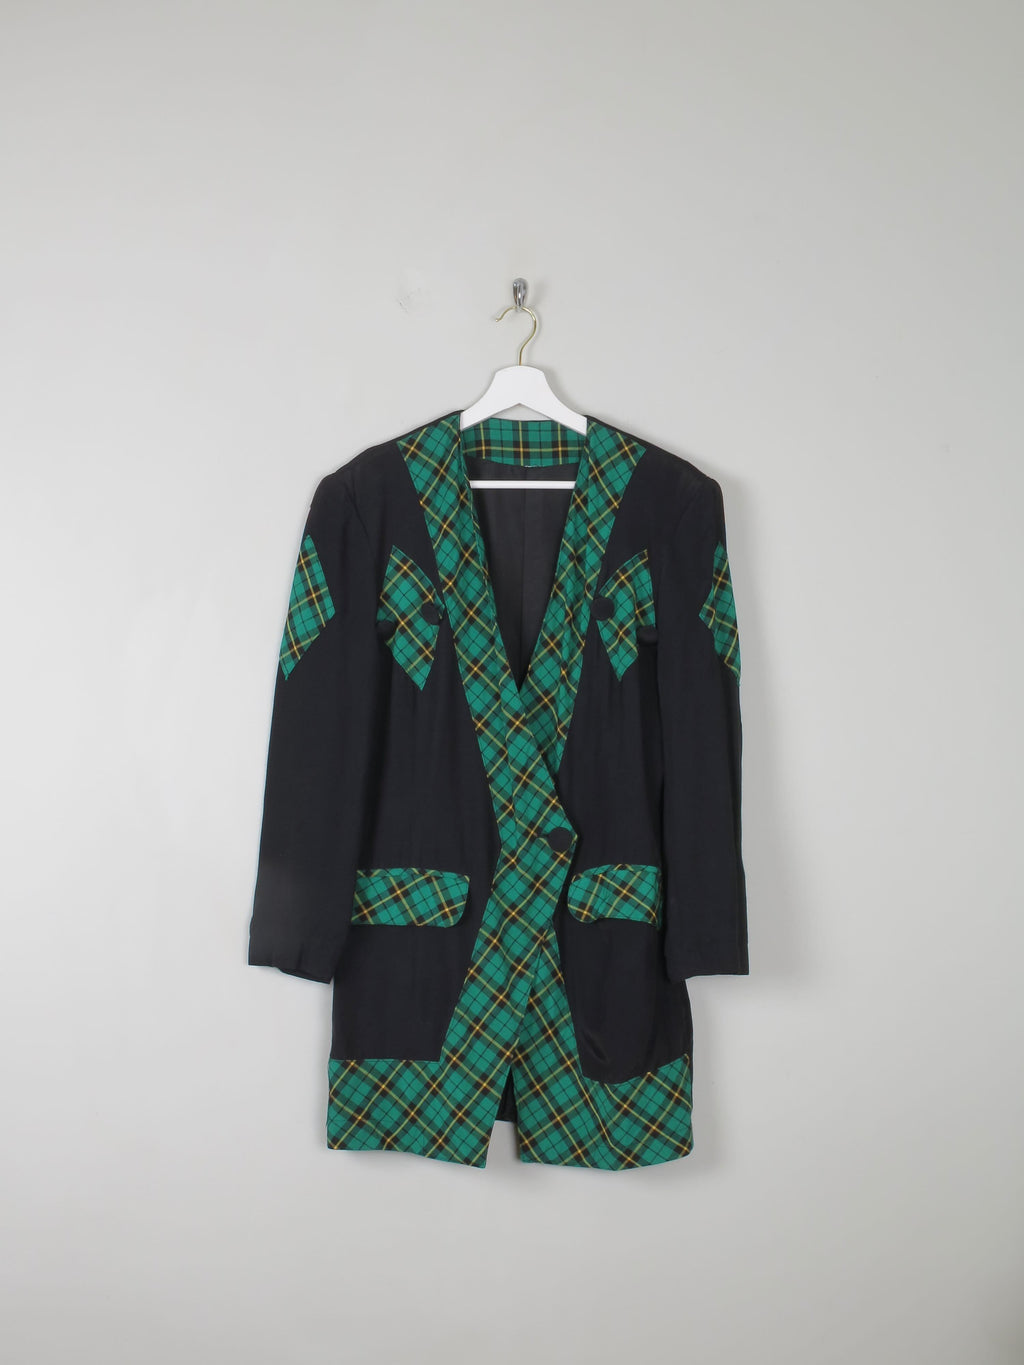 Women's Vintage Green & Black Tartan Jacket S - The Harlequin